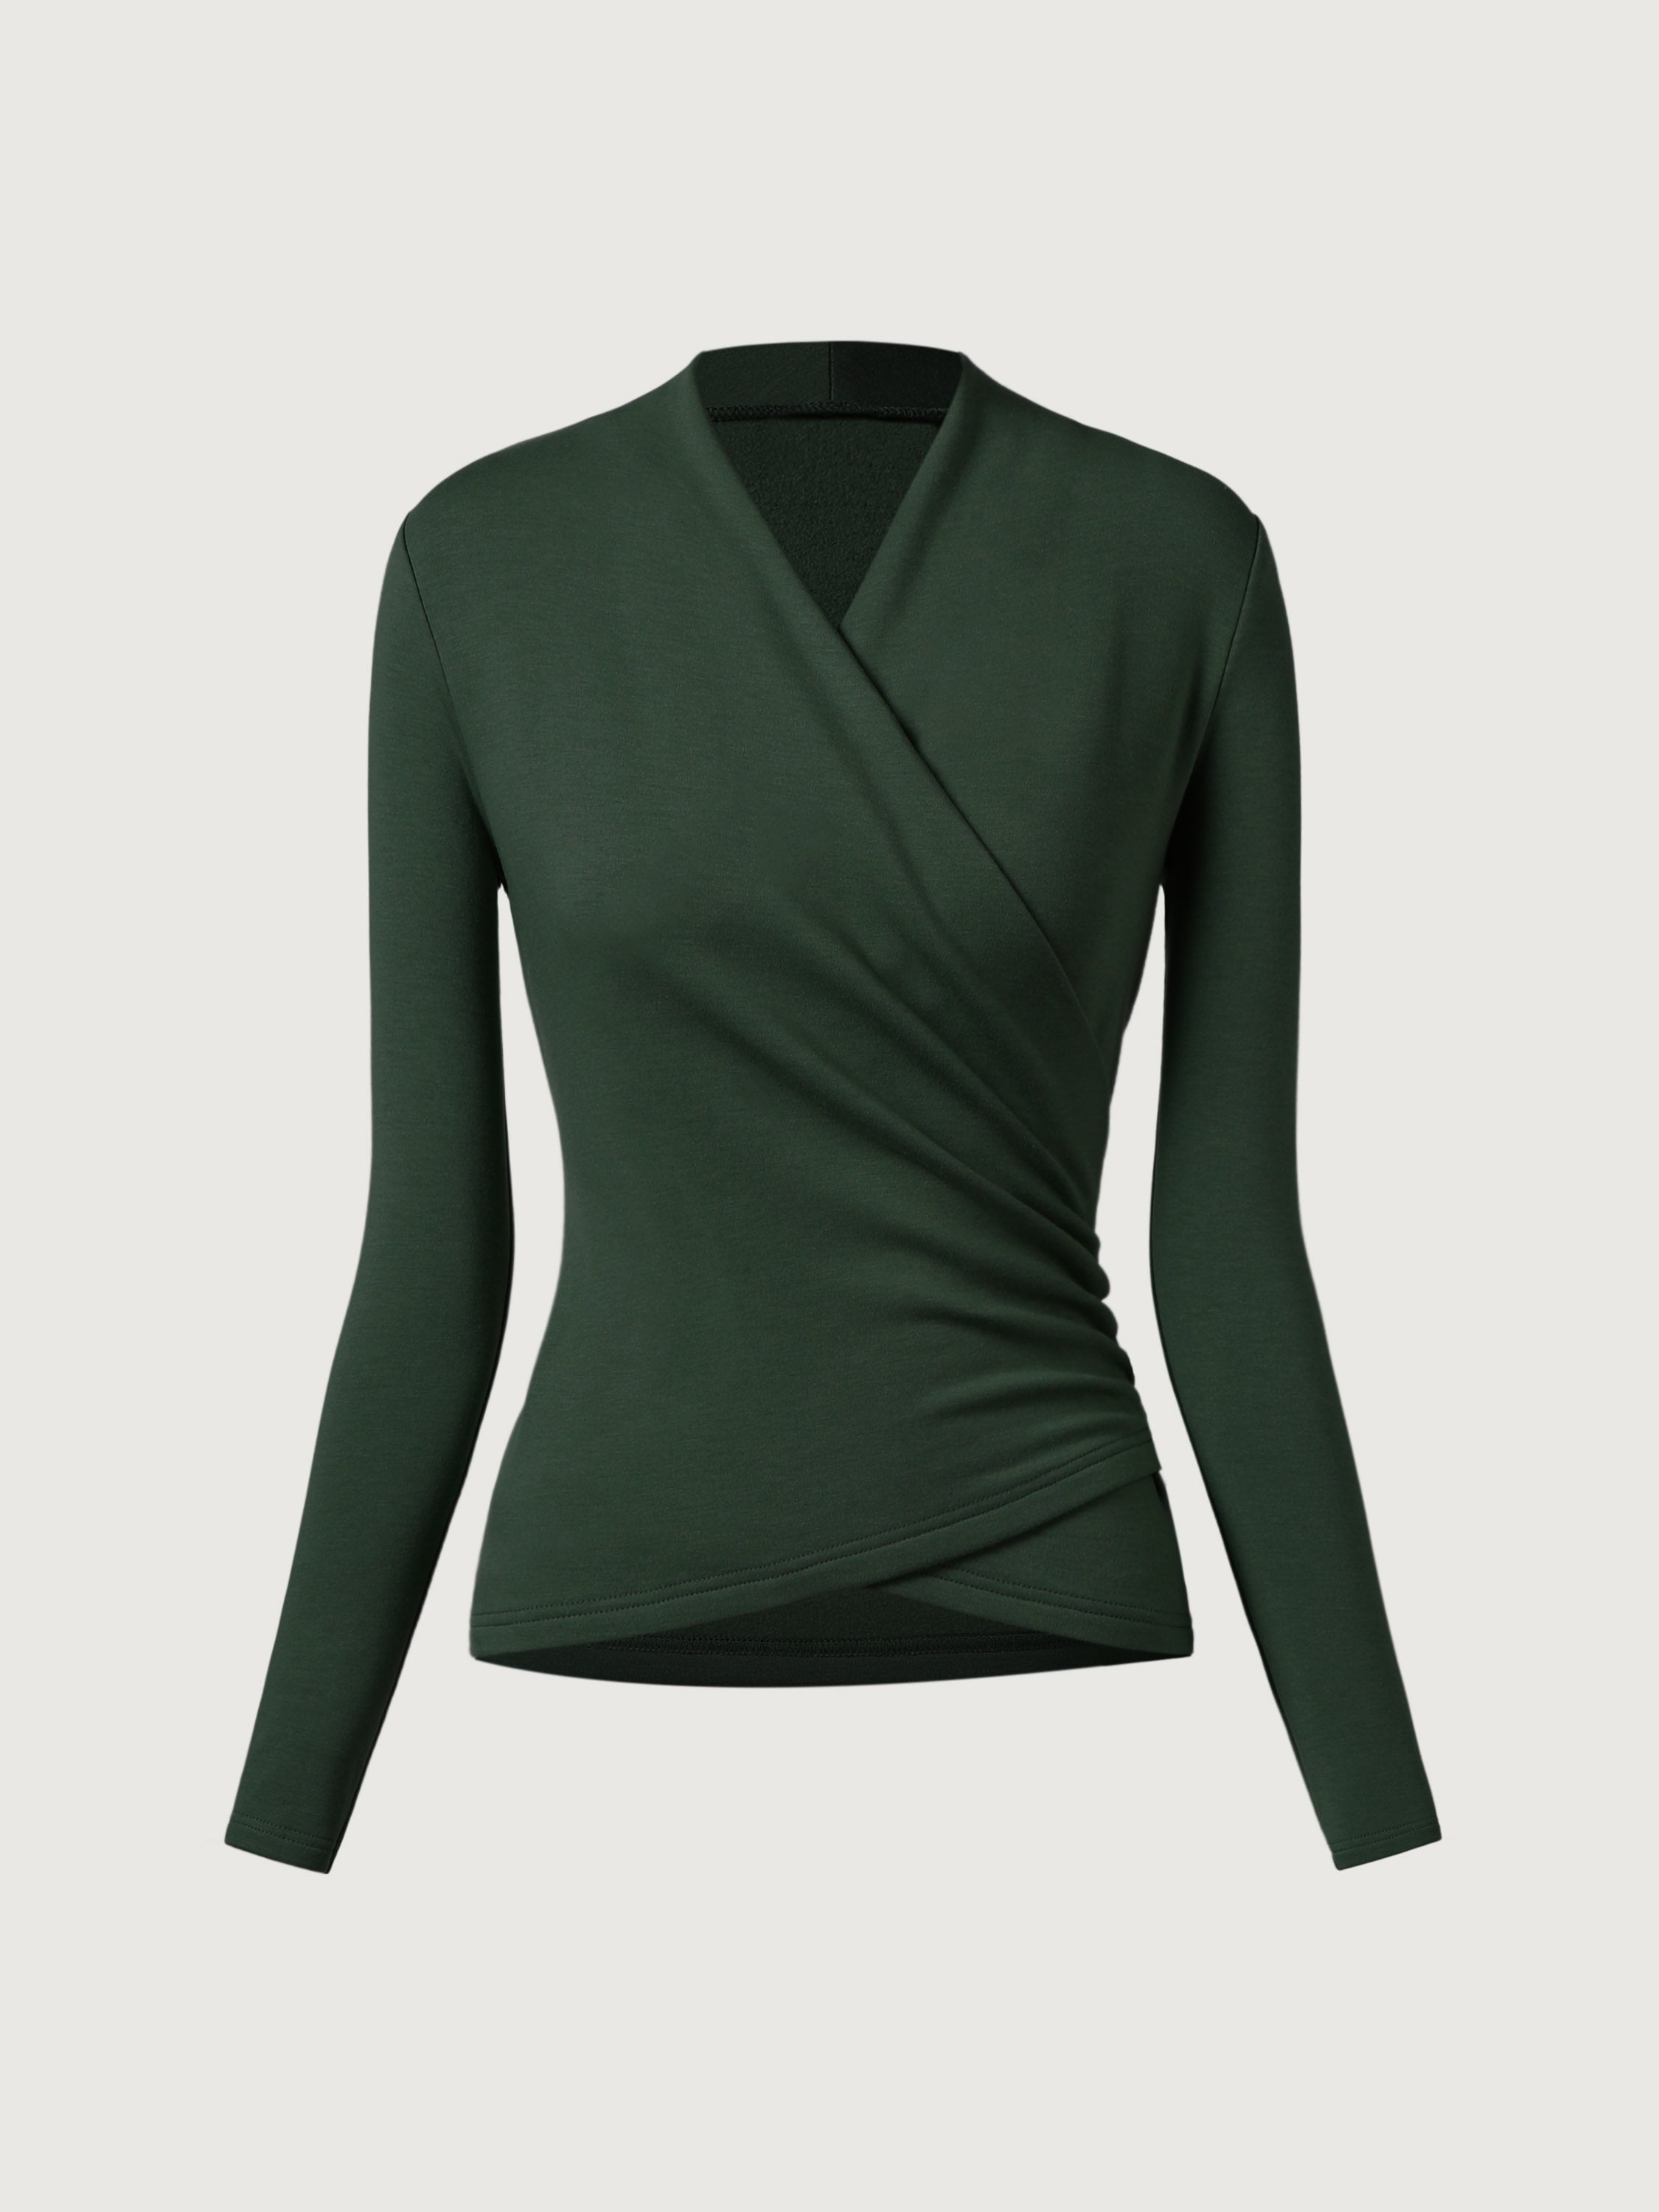 Green Smoke Melrose Luxesoft Contoured Long Sleeve Top, Women's Tops